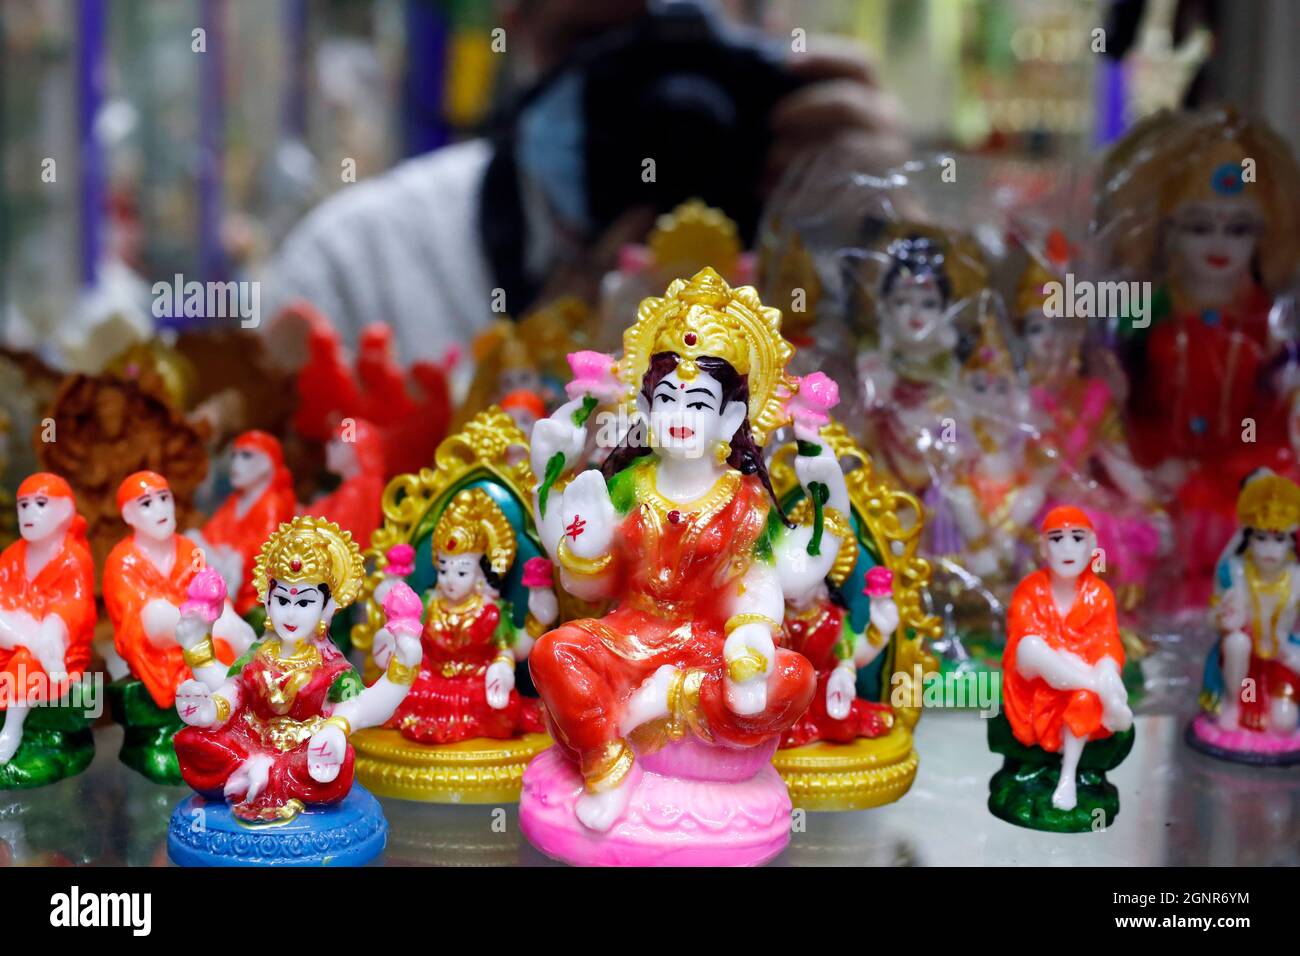 Religious hindu god statues for sale in spiritual shop.  Dubai. United Arab Emirates. Stock Photo